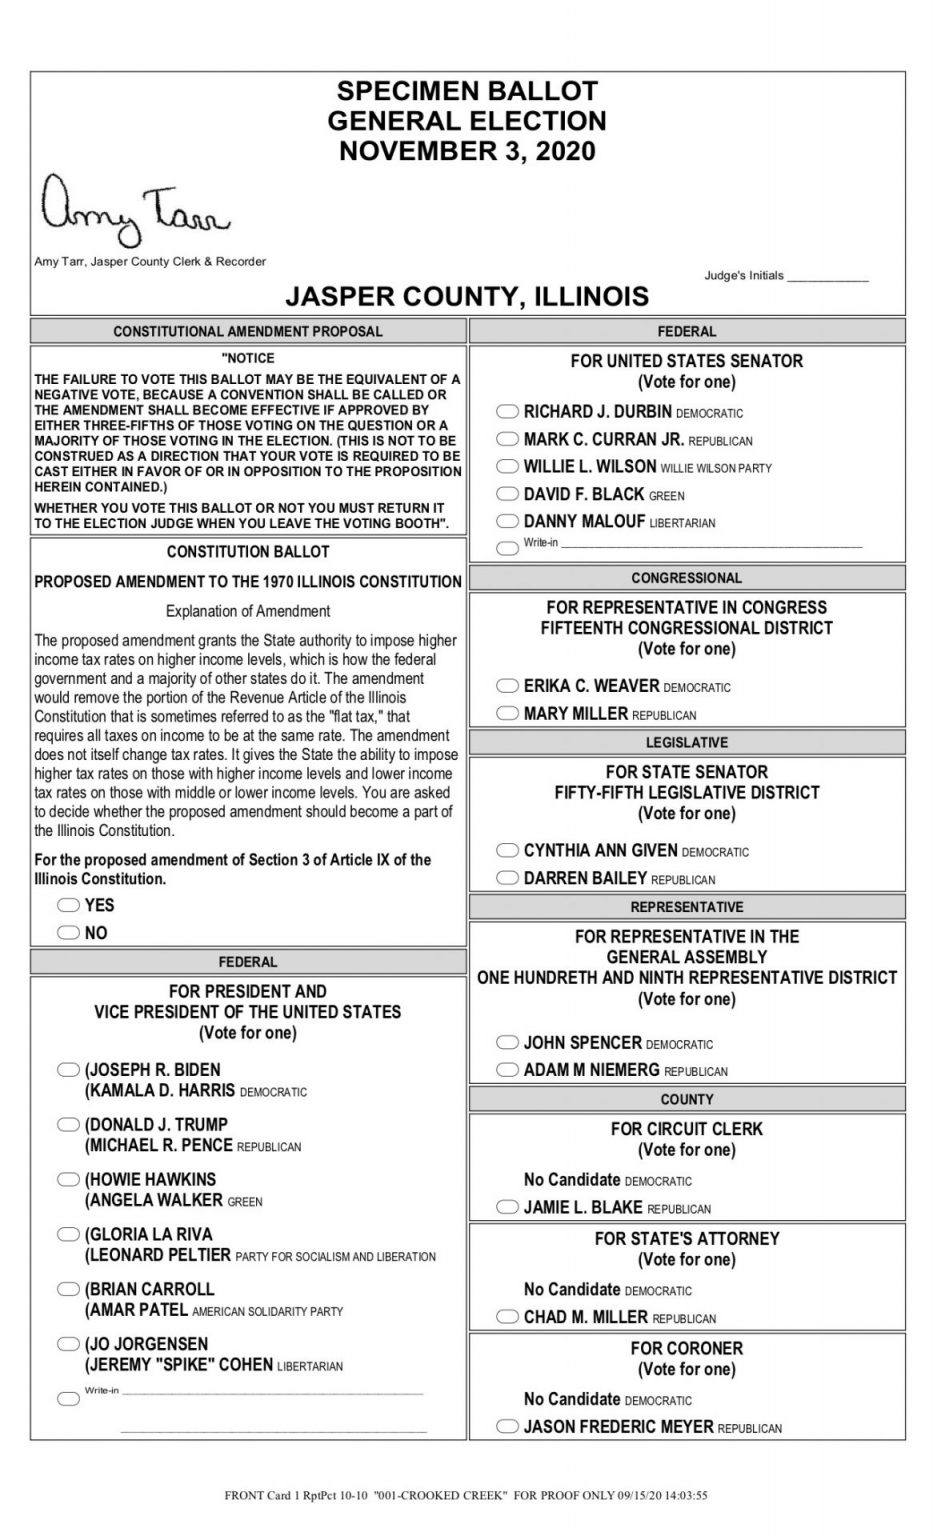 The Jasper County General Election Specimen Ballot Jasper County